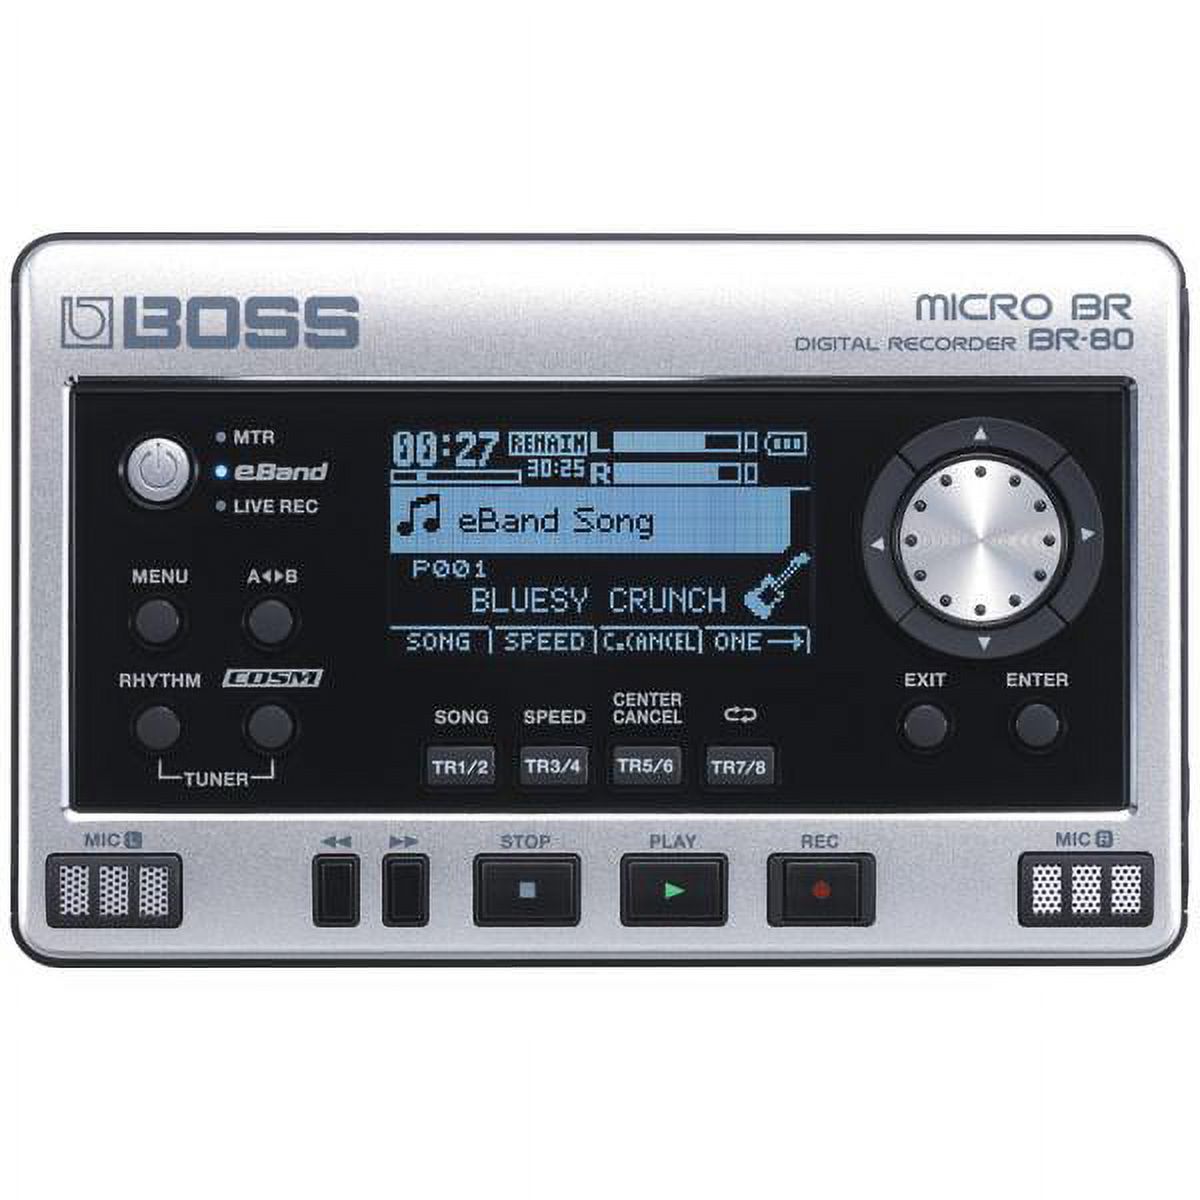 BOSS Audio - MICRO BR BR-80 Digital Recorder - image 1 of 7